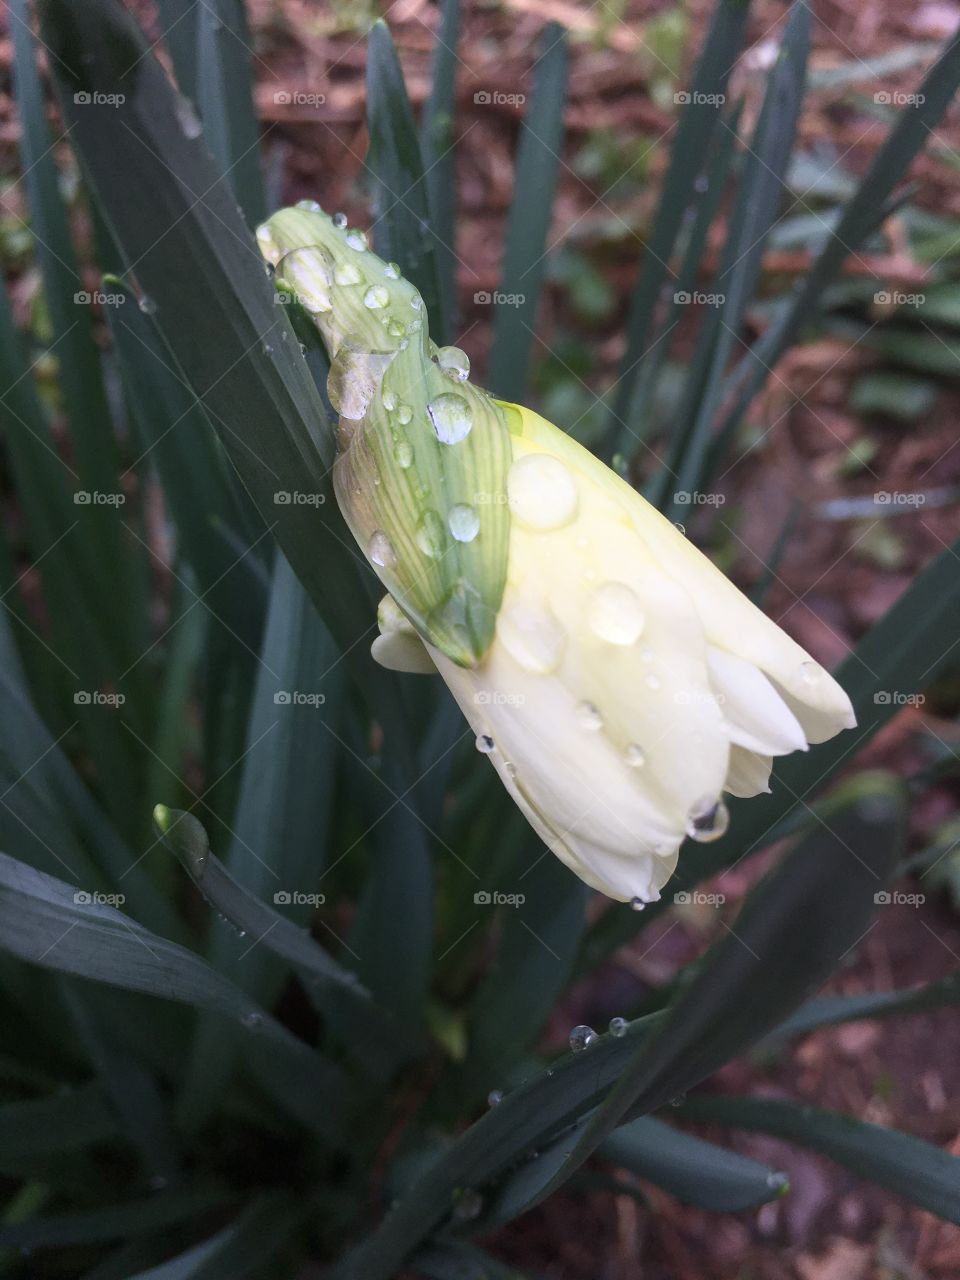 Raindrops on daffodil